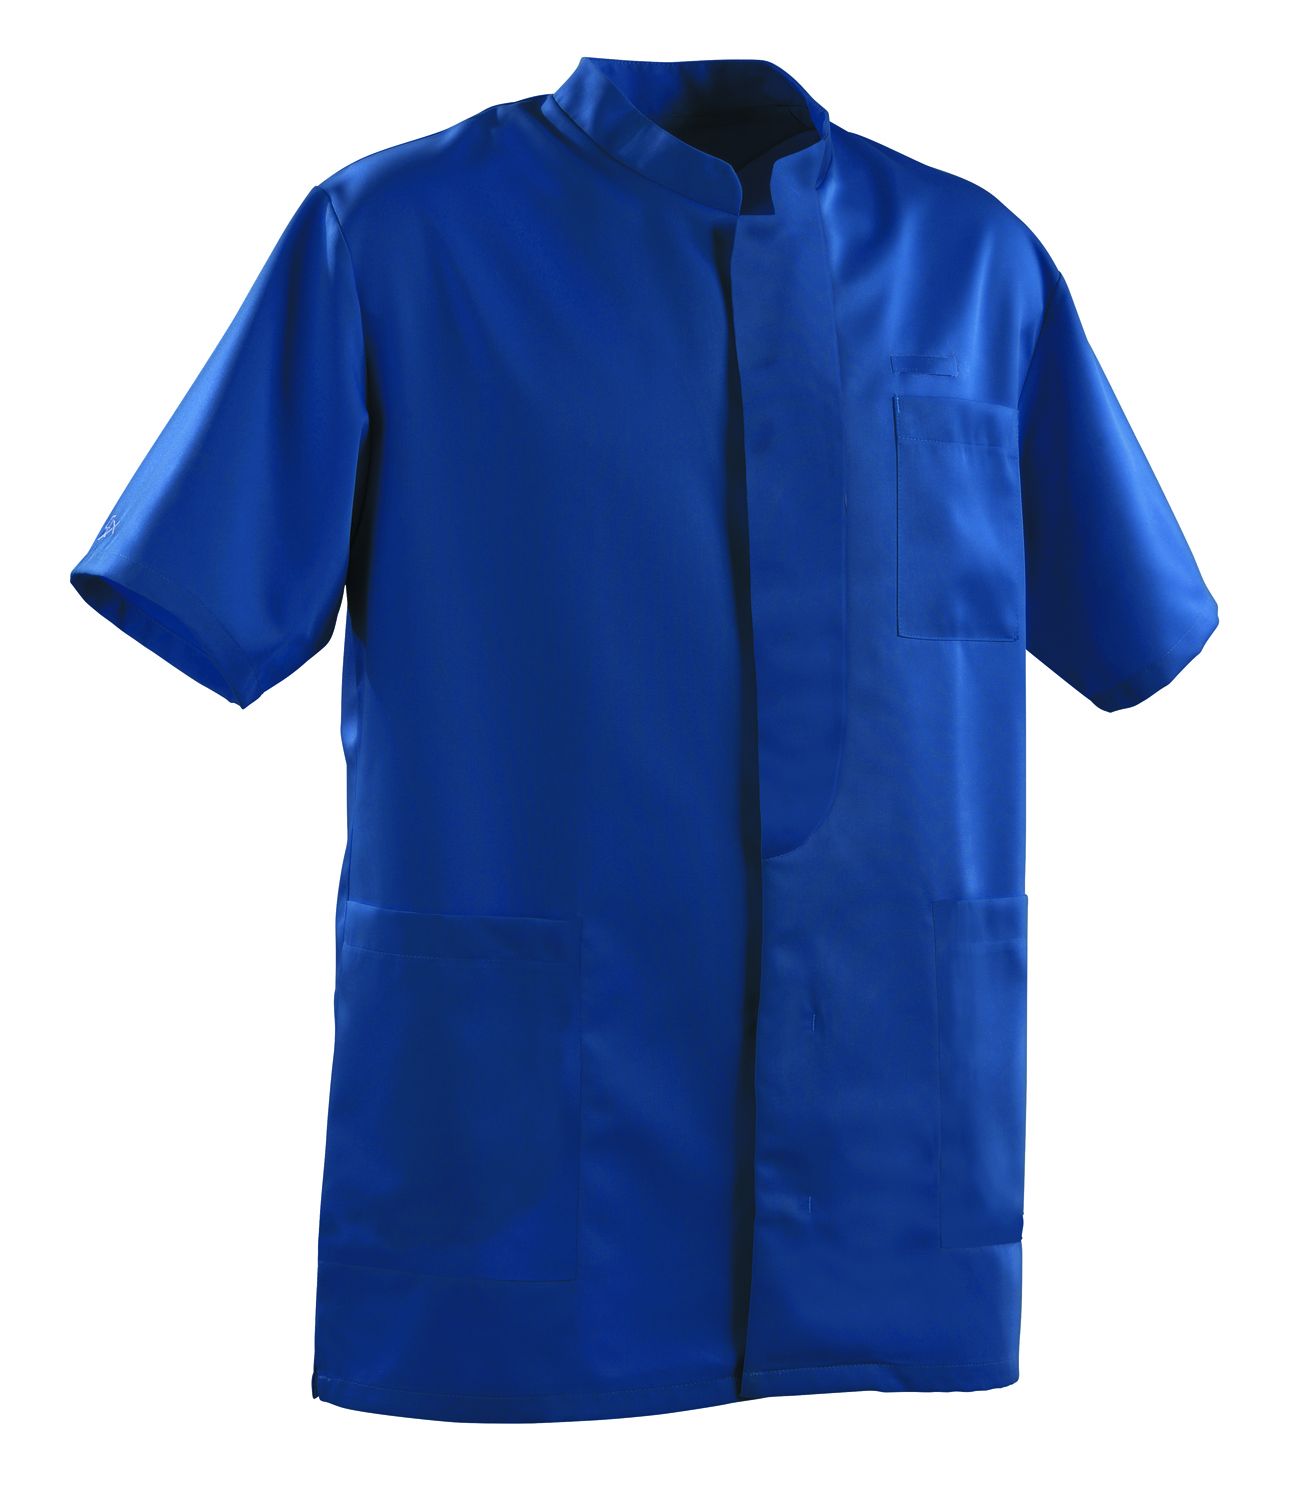 Men's medical tunic navy blue